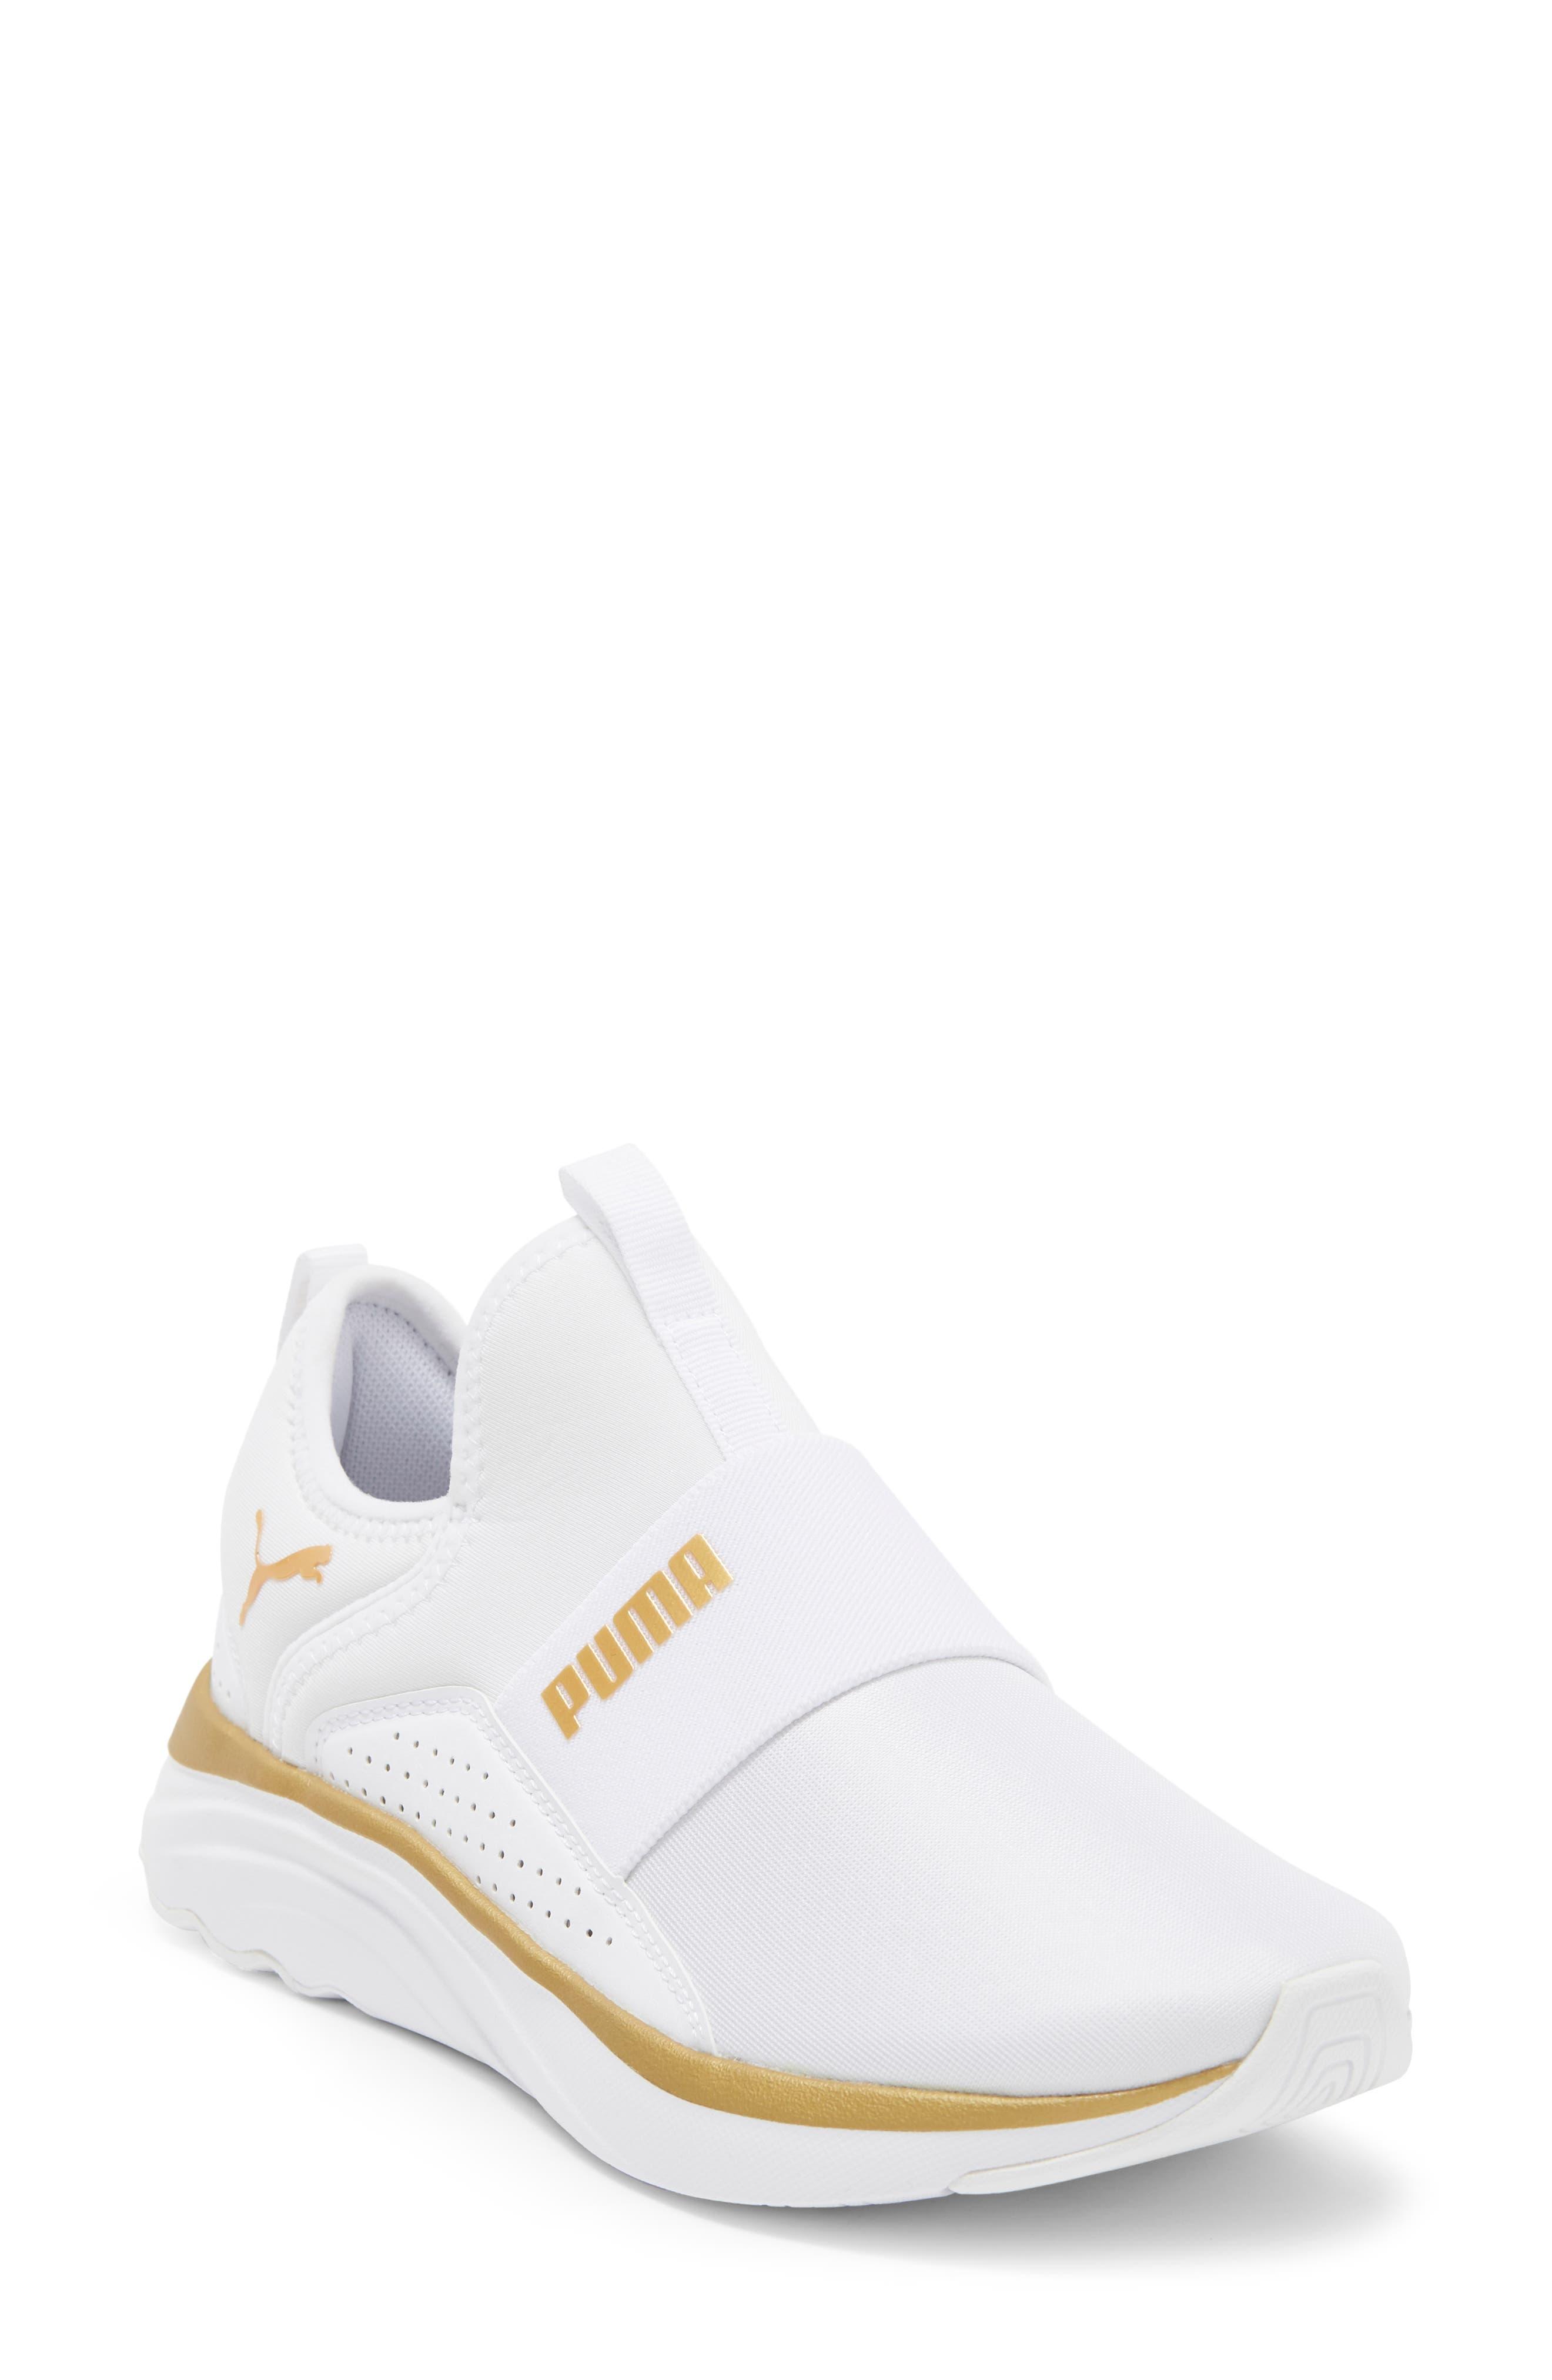 PUMA Softride Sophia Slip-on Sneaker in White | Lyst